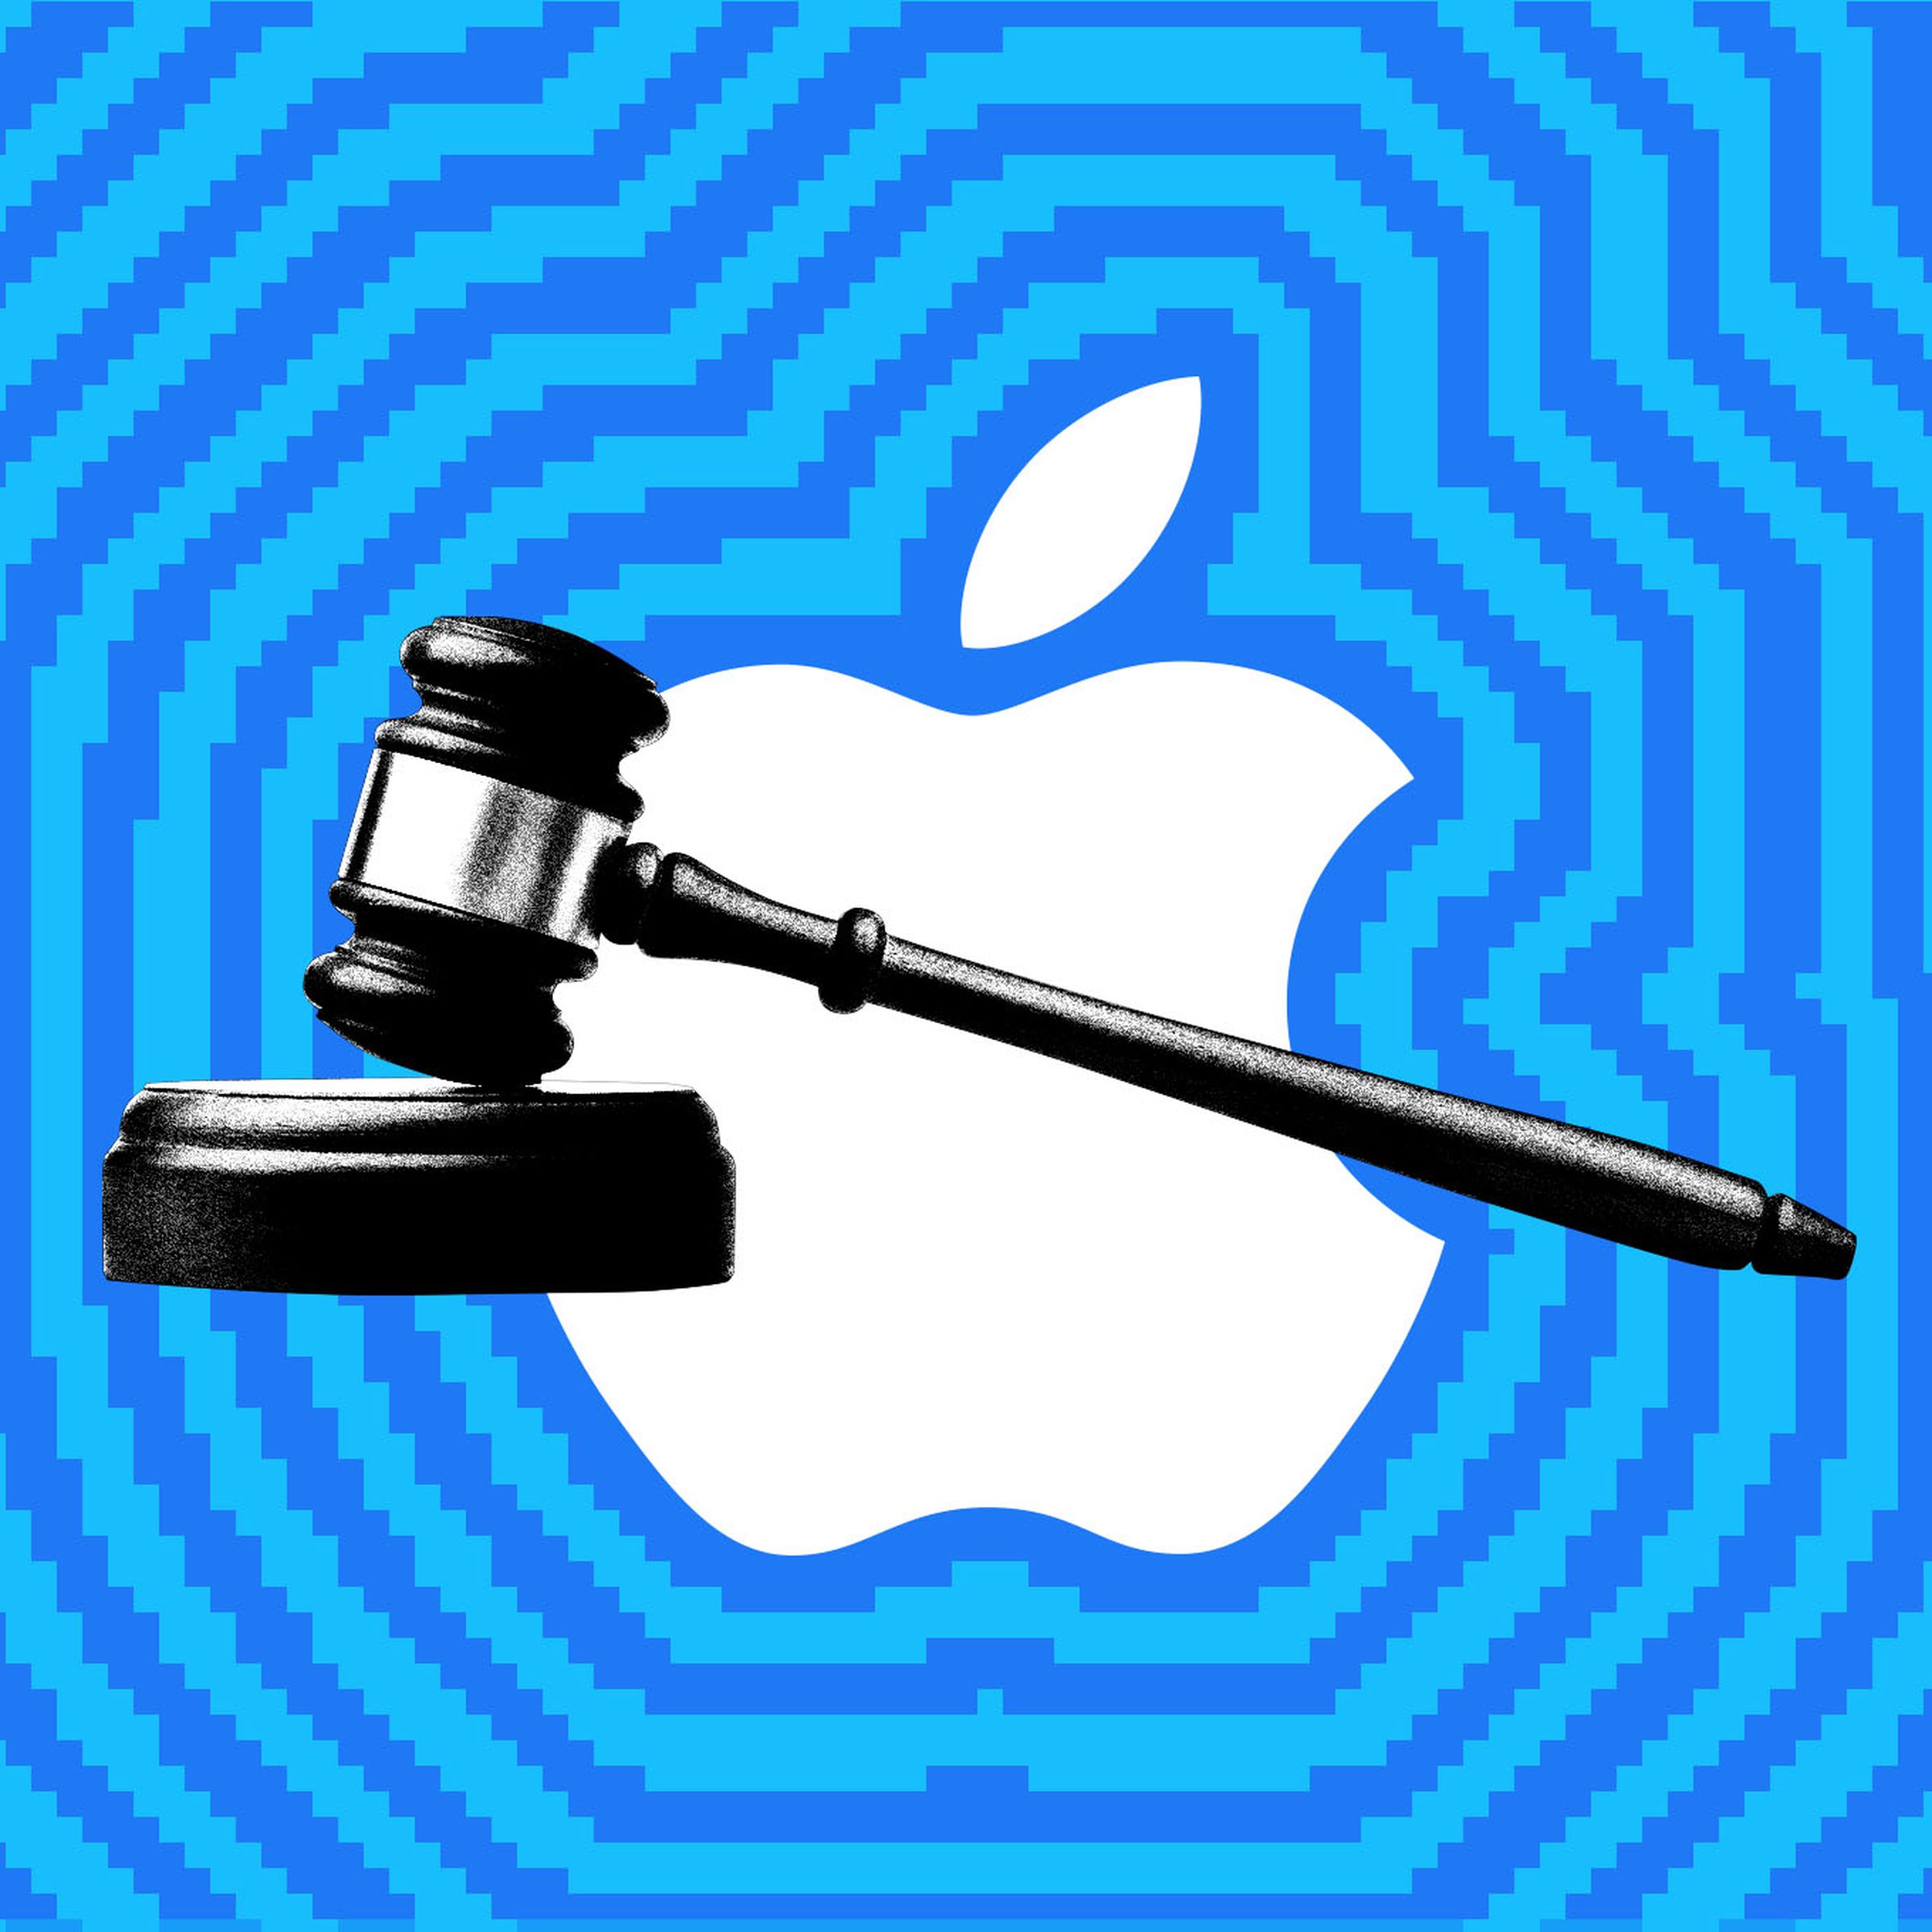 Illustration of the Apple logo behind a gavel.